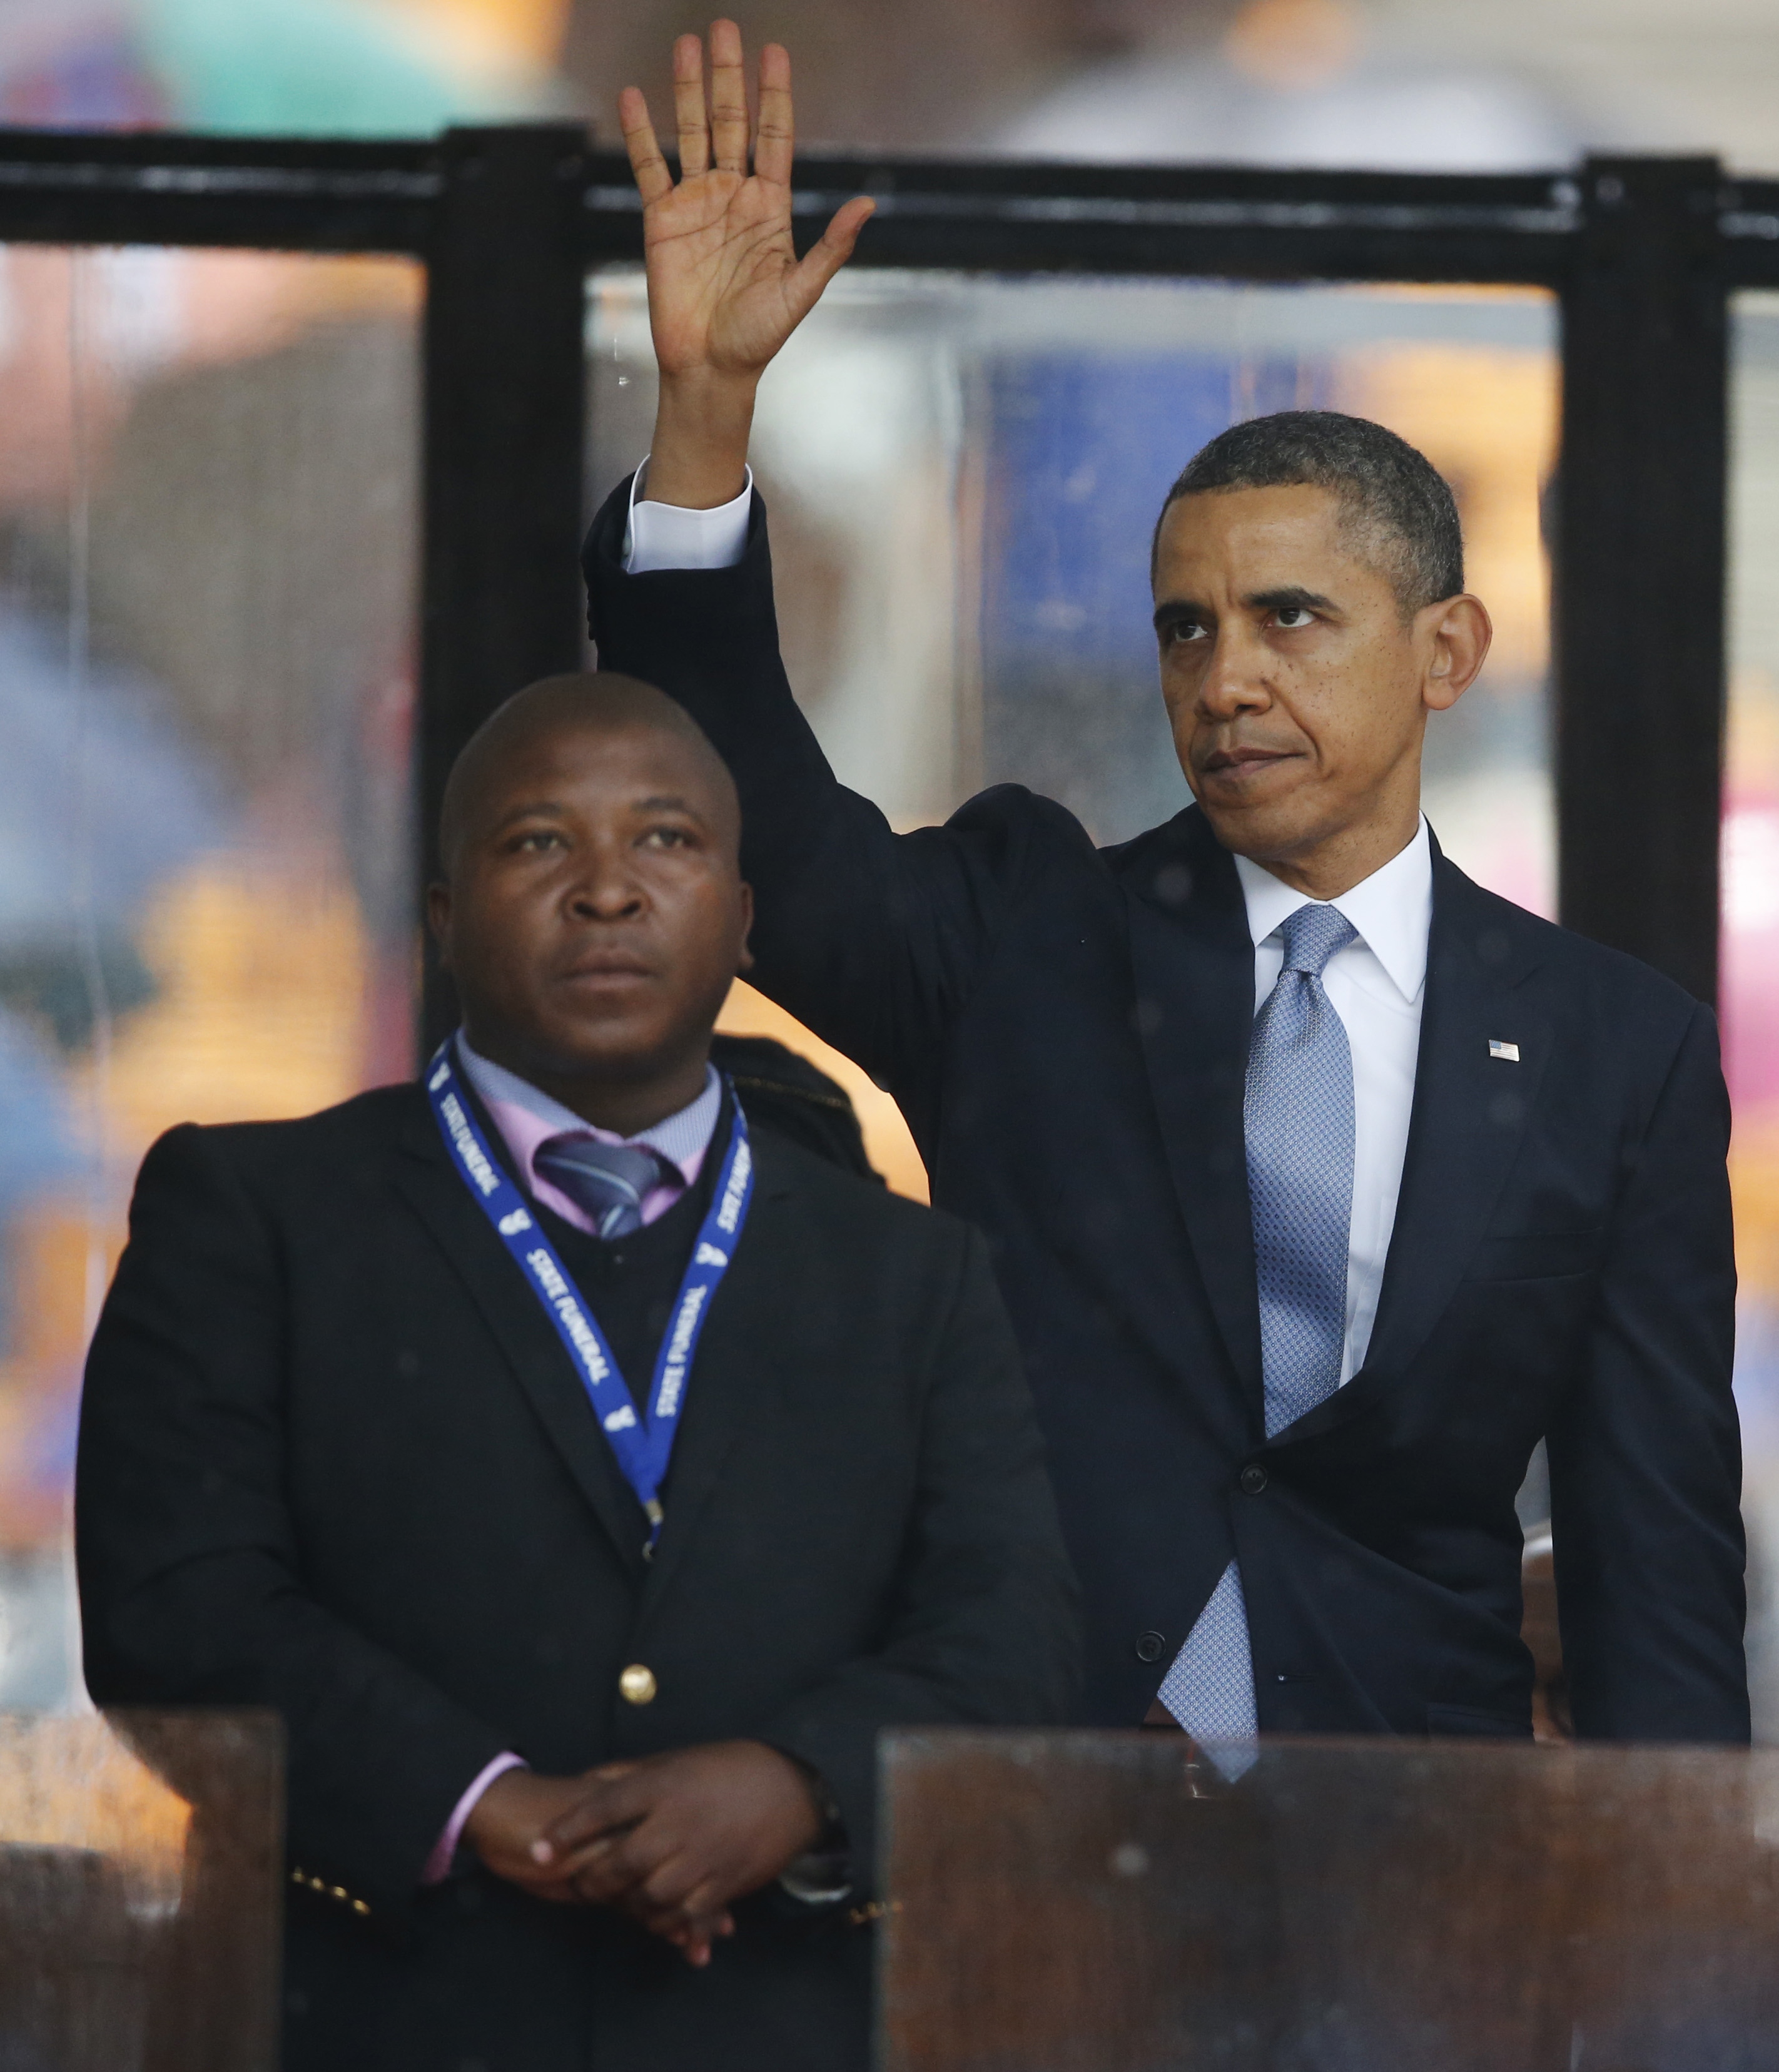 Жестомимичният преводач Тамасанка Янте до президента на САЩ Барак Обама